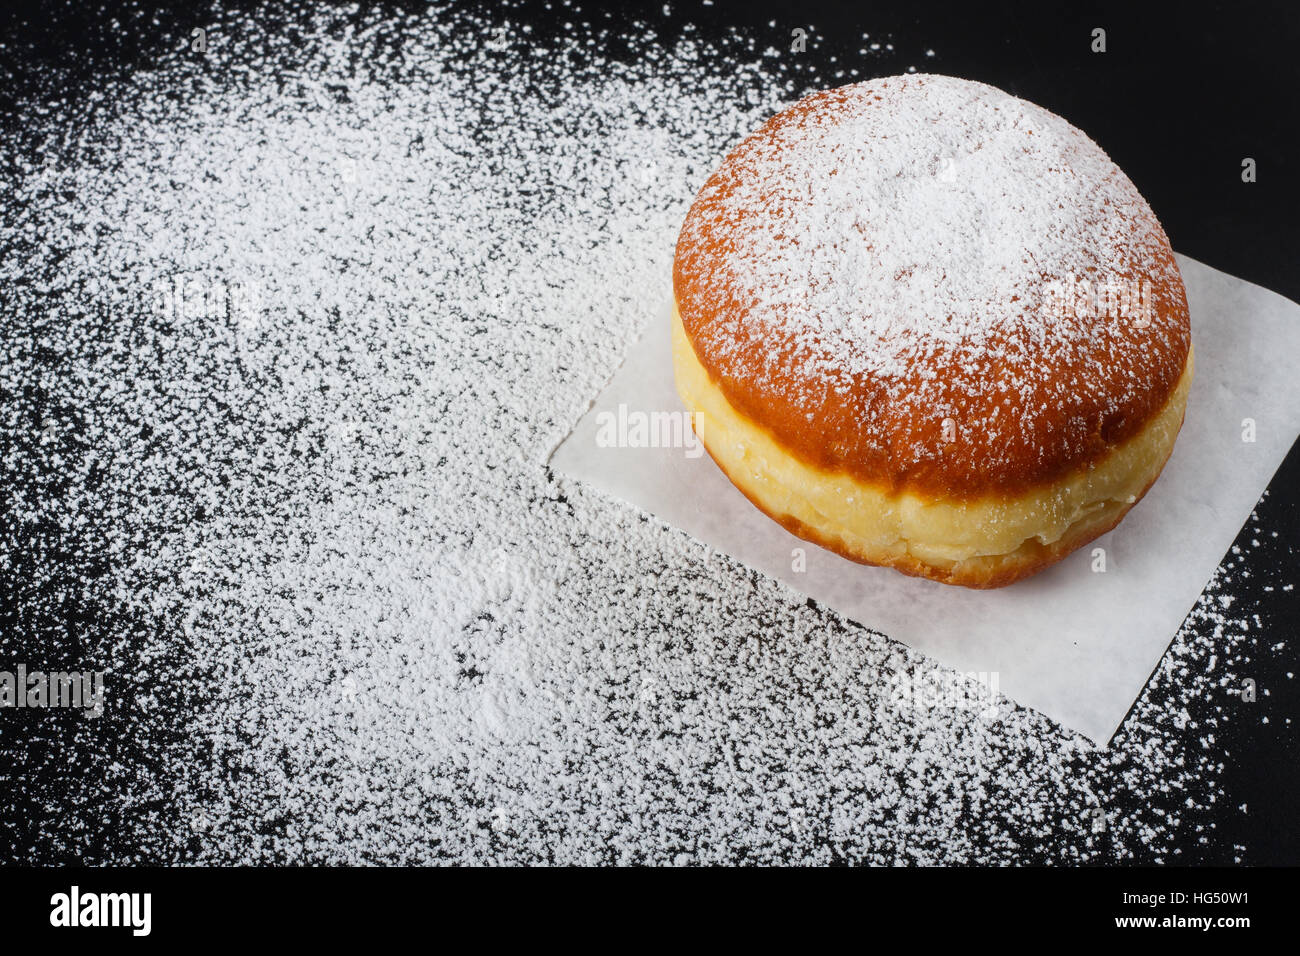 Donut and powdered sugar on dark background Stock Photo